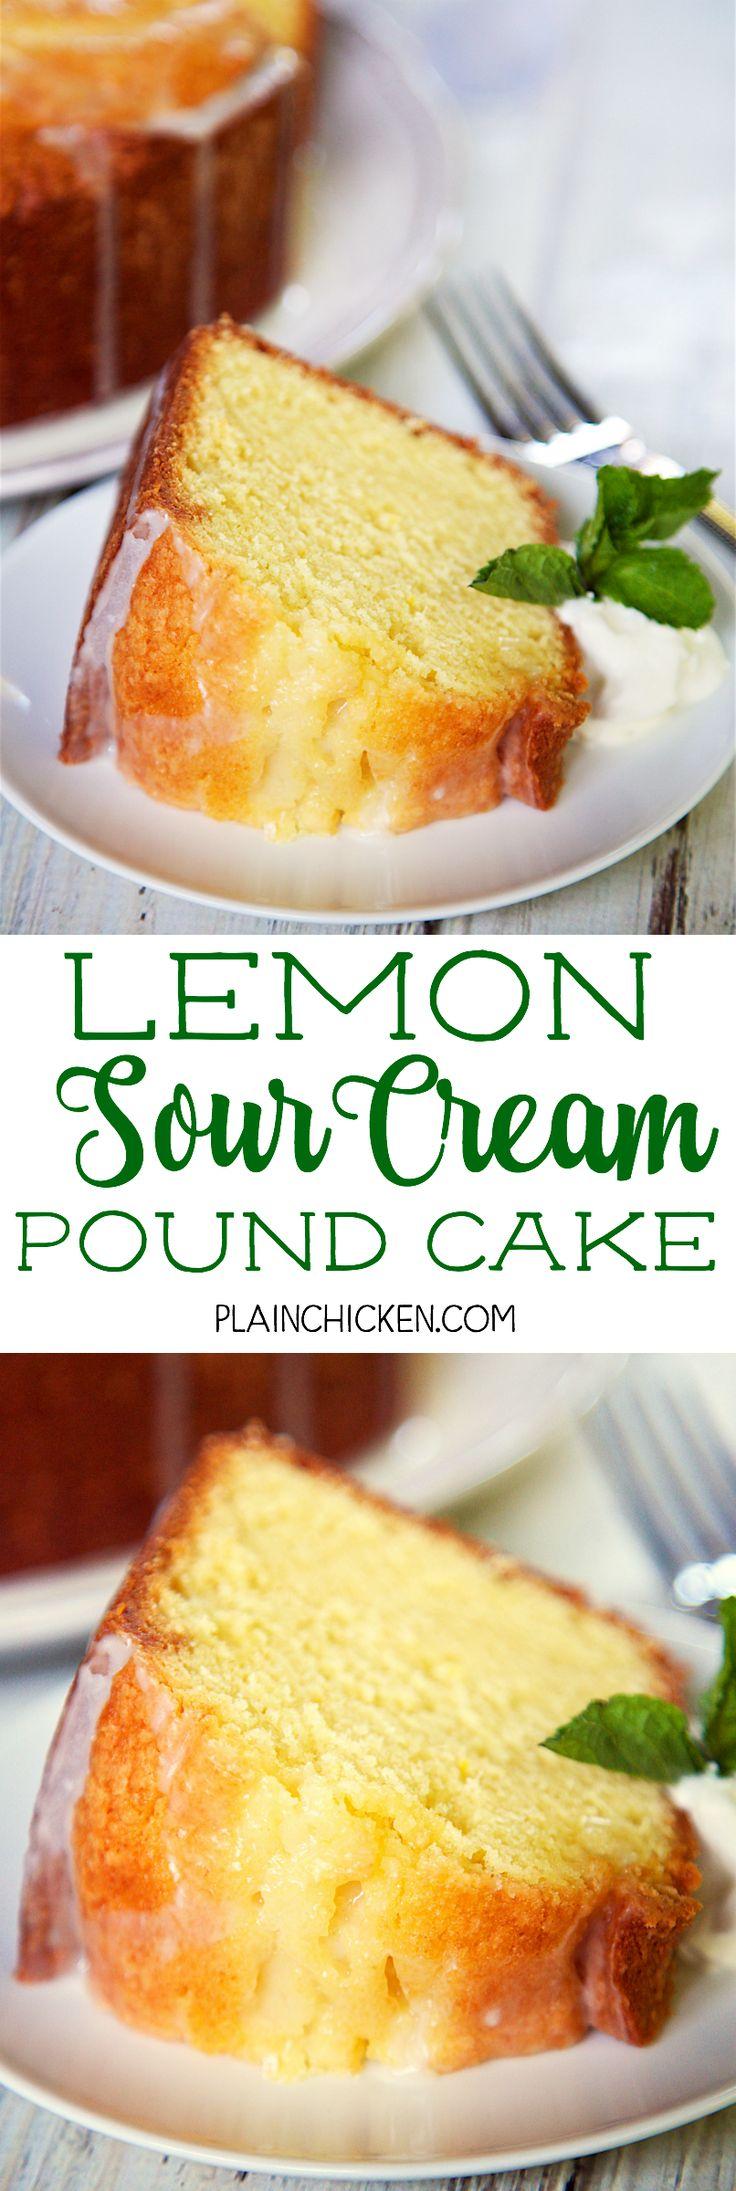 Wedding - Lemon Sour Cream Pound Cake